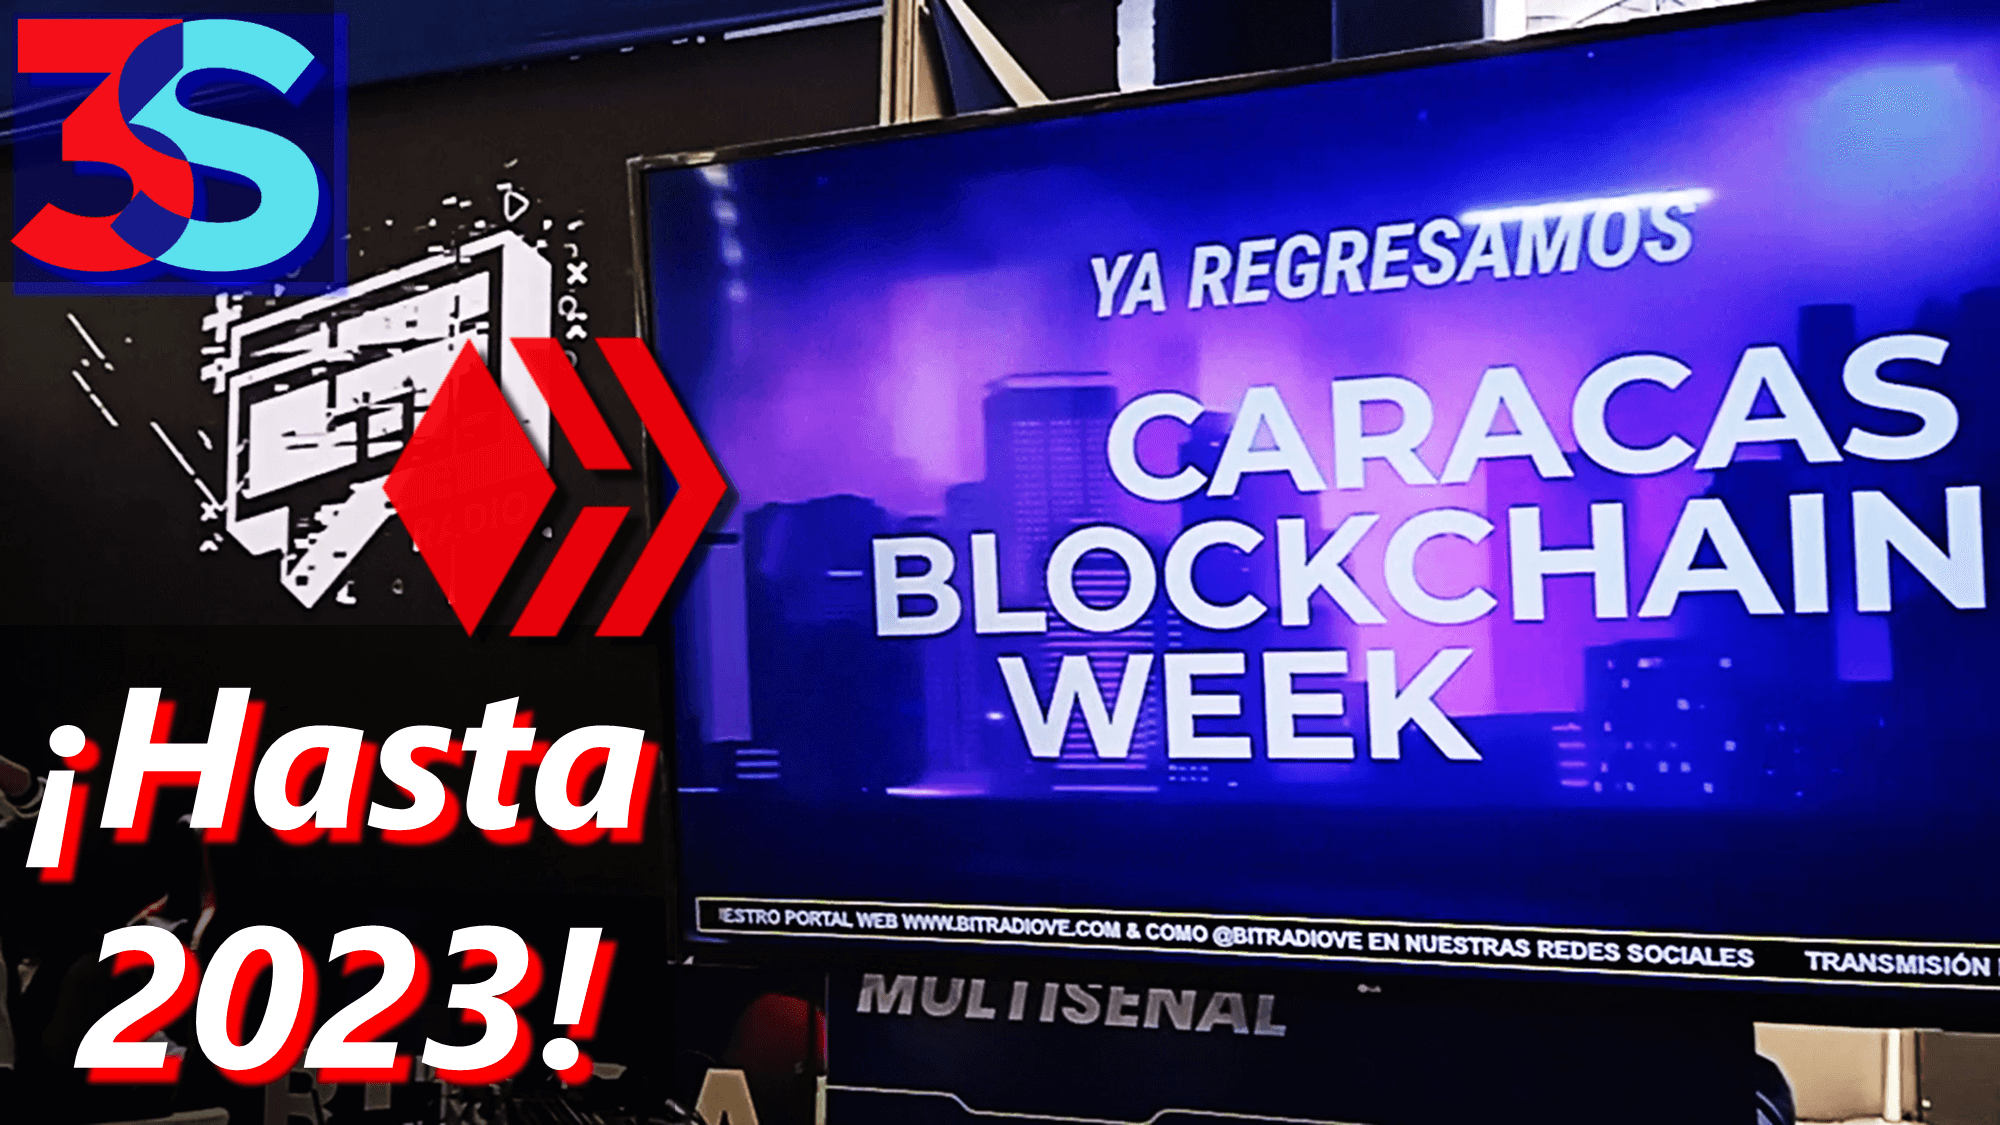 Resumen de la Caracas Blockchain Week Hasta 2023 CBW Venezuela acont Hive.png